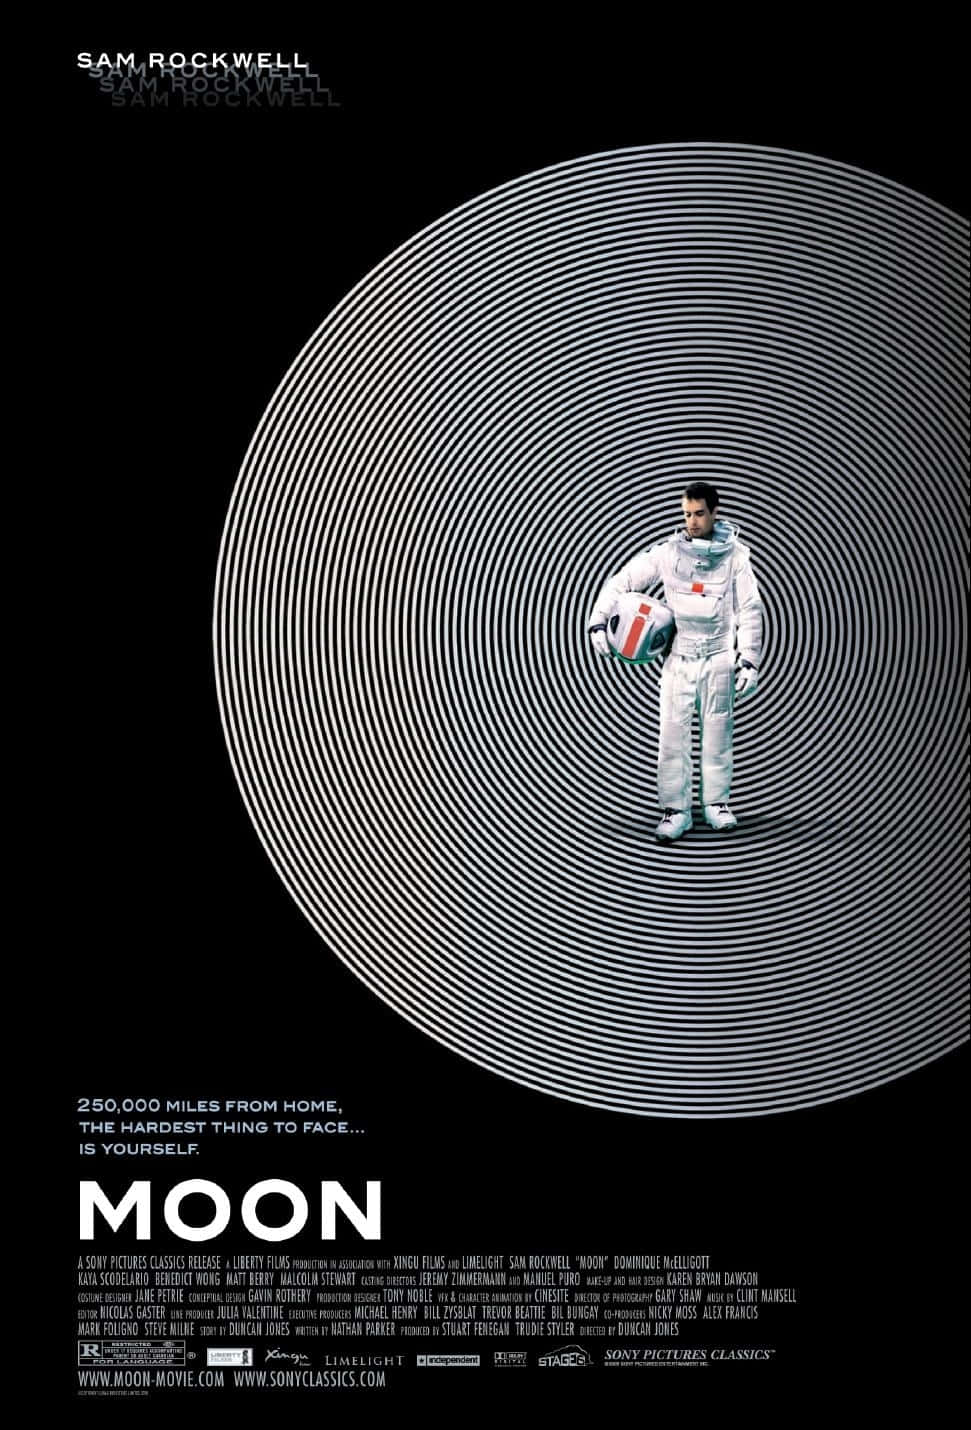 Sam Rockwell Moon 2009 Movie Poster Art Wallpaper